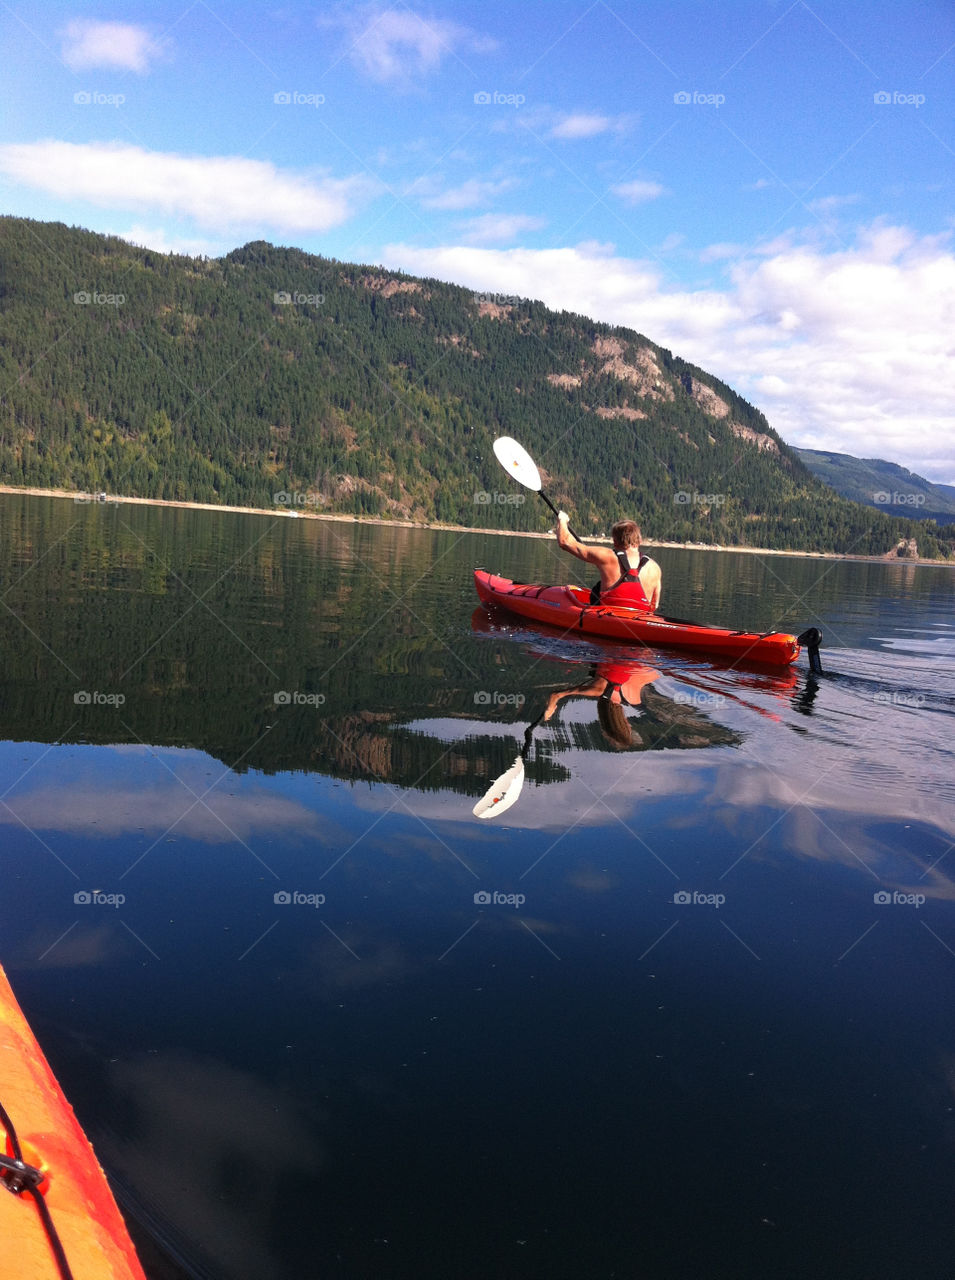 italy lake reflection kayak by patsyjk